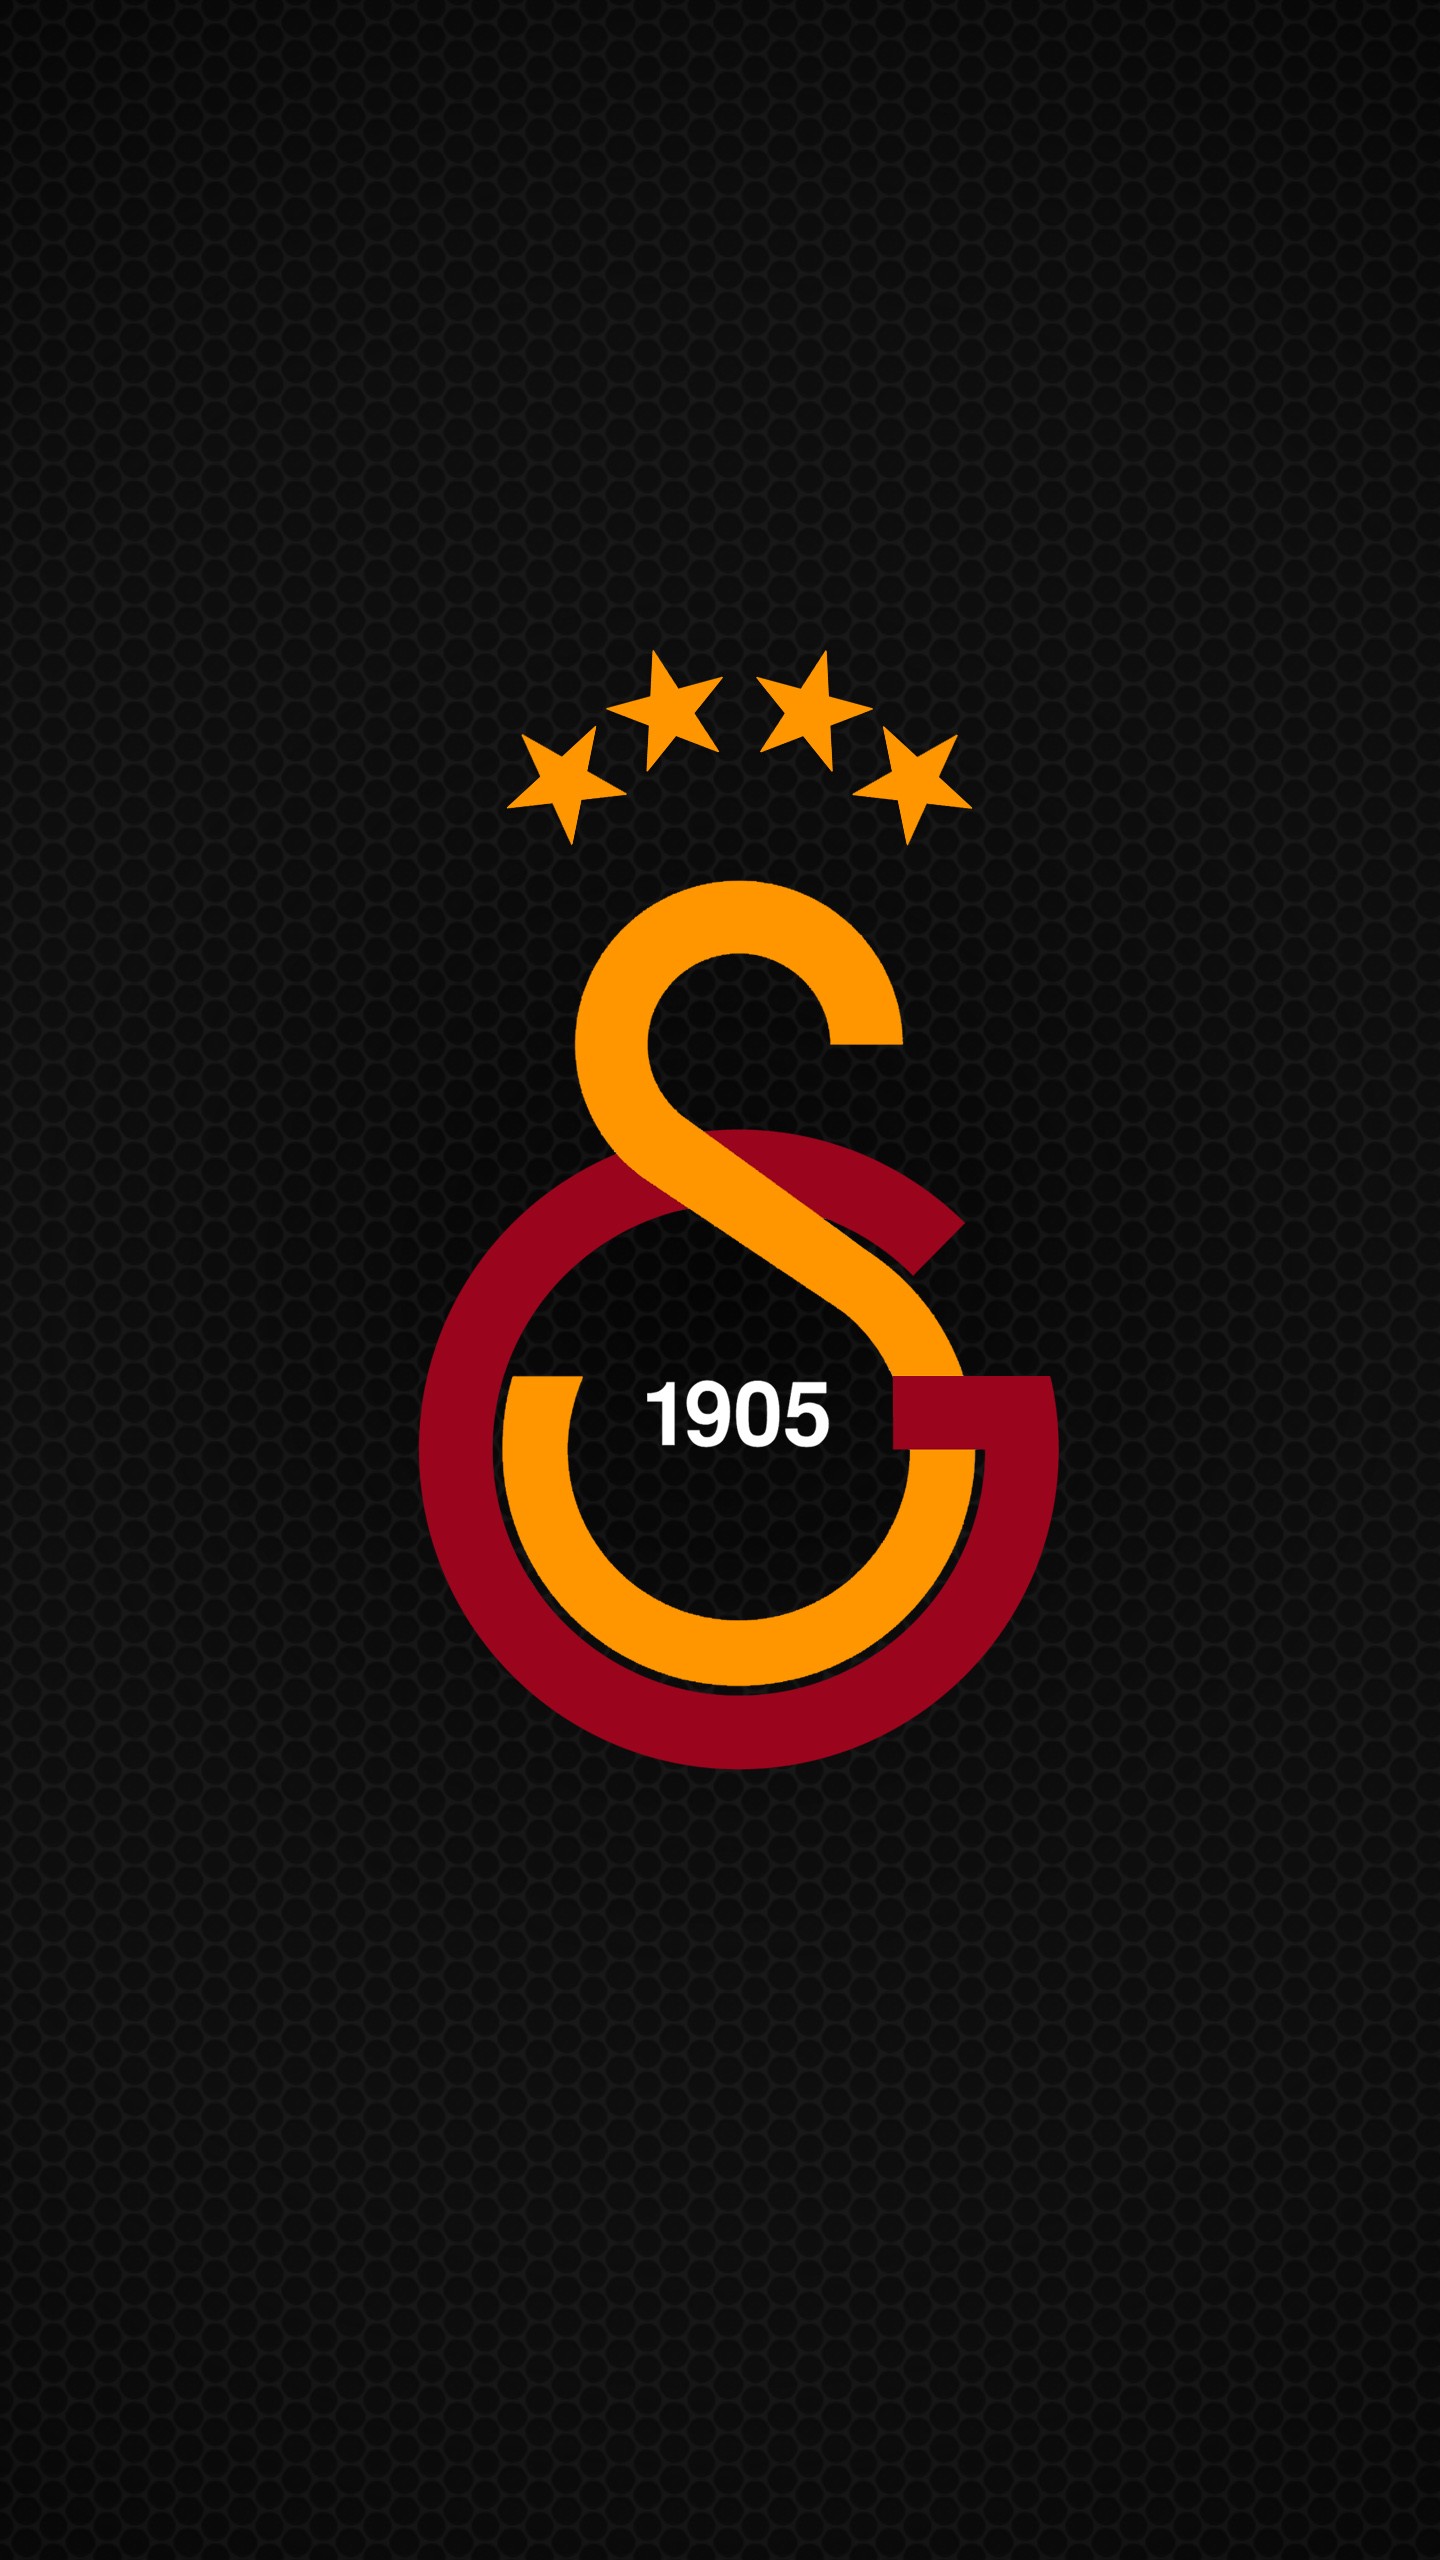 General 1440x2560 Galatasaray S.K. soccer 1905 (Year) logo